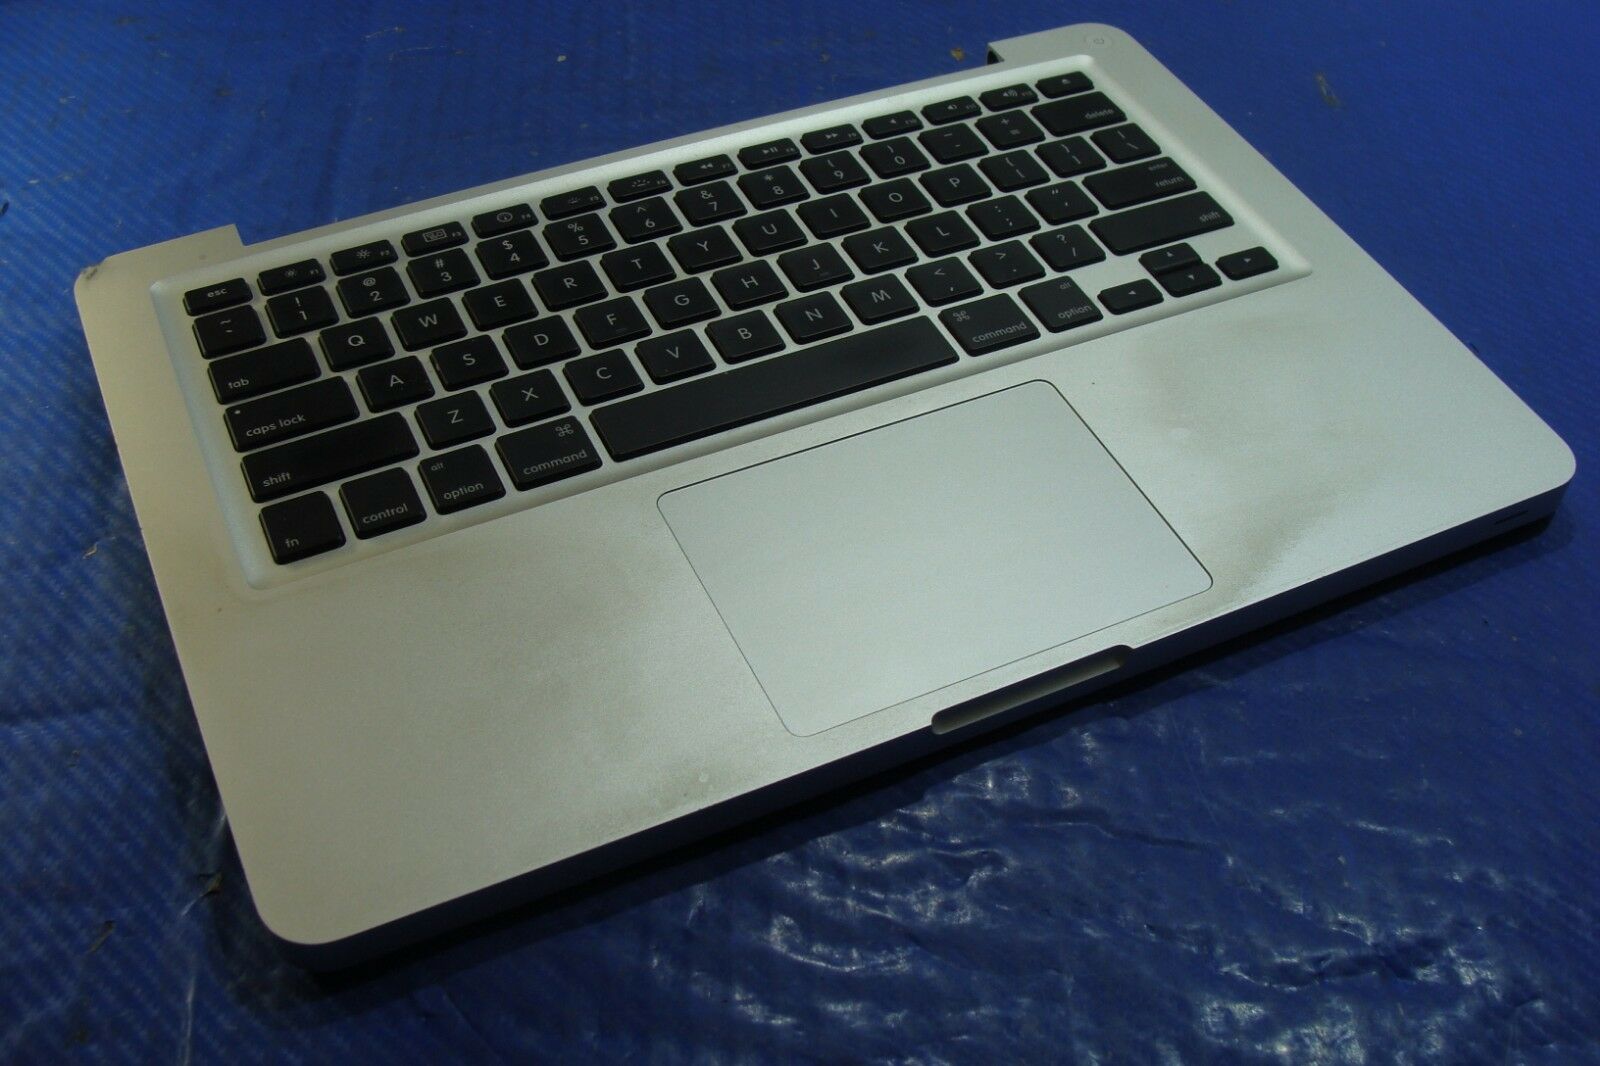 MacBook Pro A1278 MB991LL/A Mid 2009 13" Top Case w/Backlit Keyboard 661-5233 #4 Apple